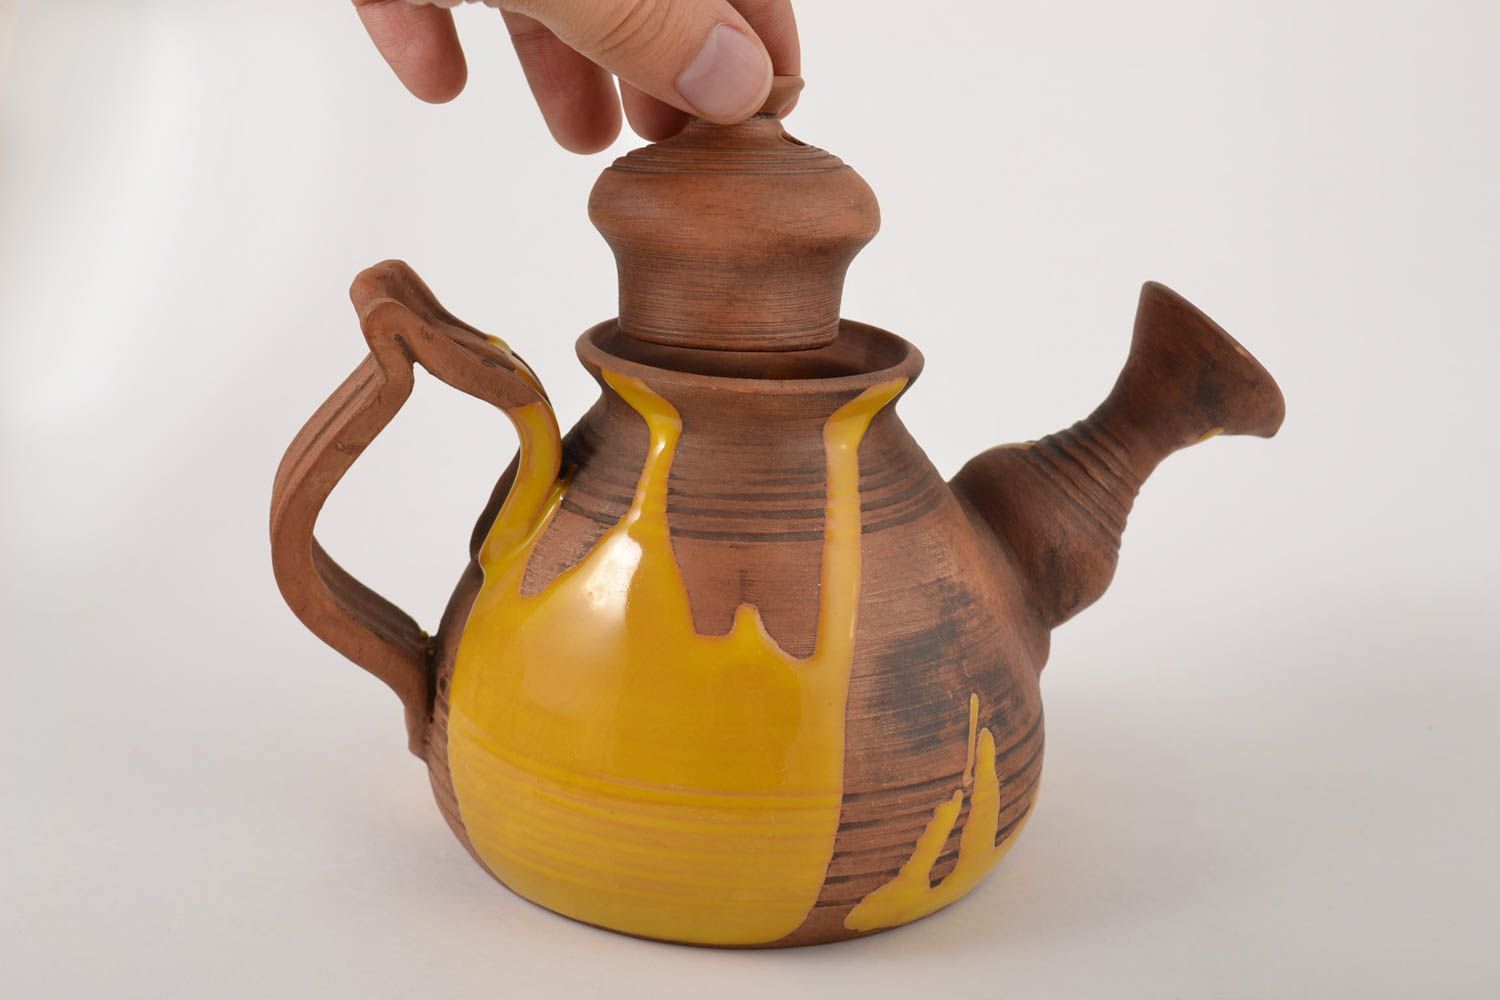 Unusual handmade ceramic teapot design kitchen supplies table setting ideas photo 2